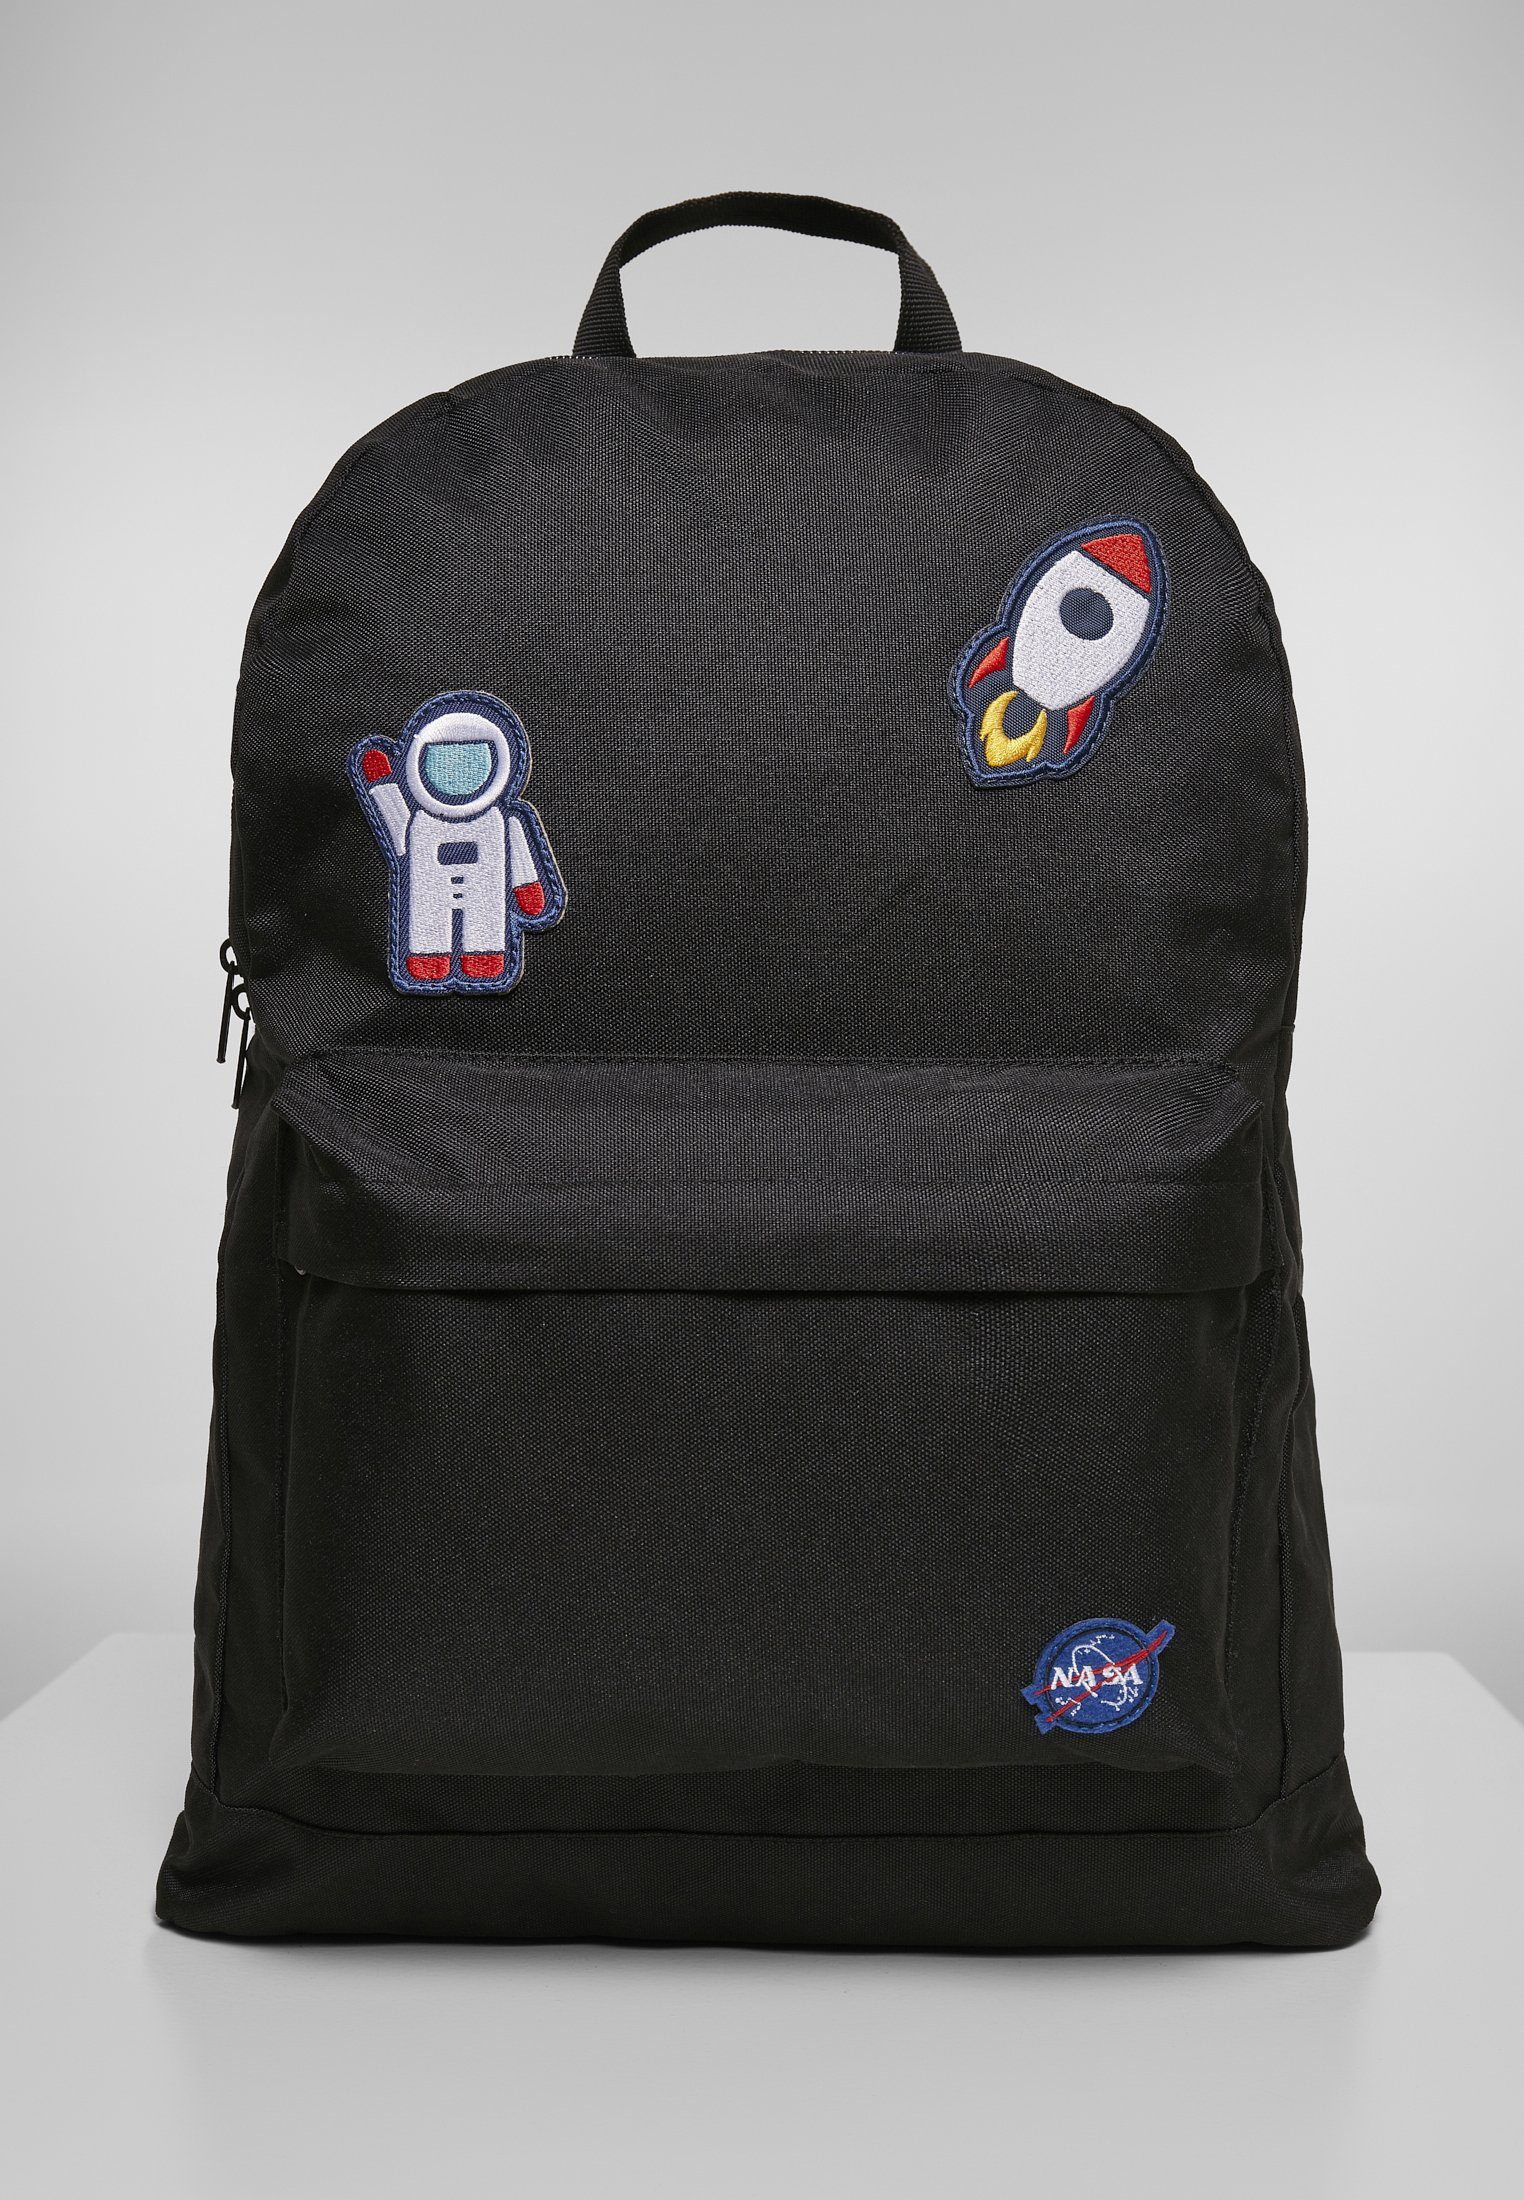 MisterTee Rucksack Accessoires NASA Backpack